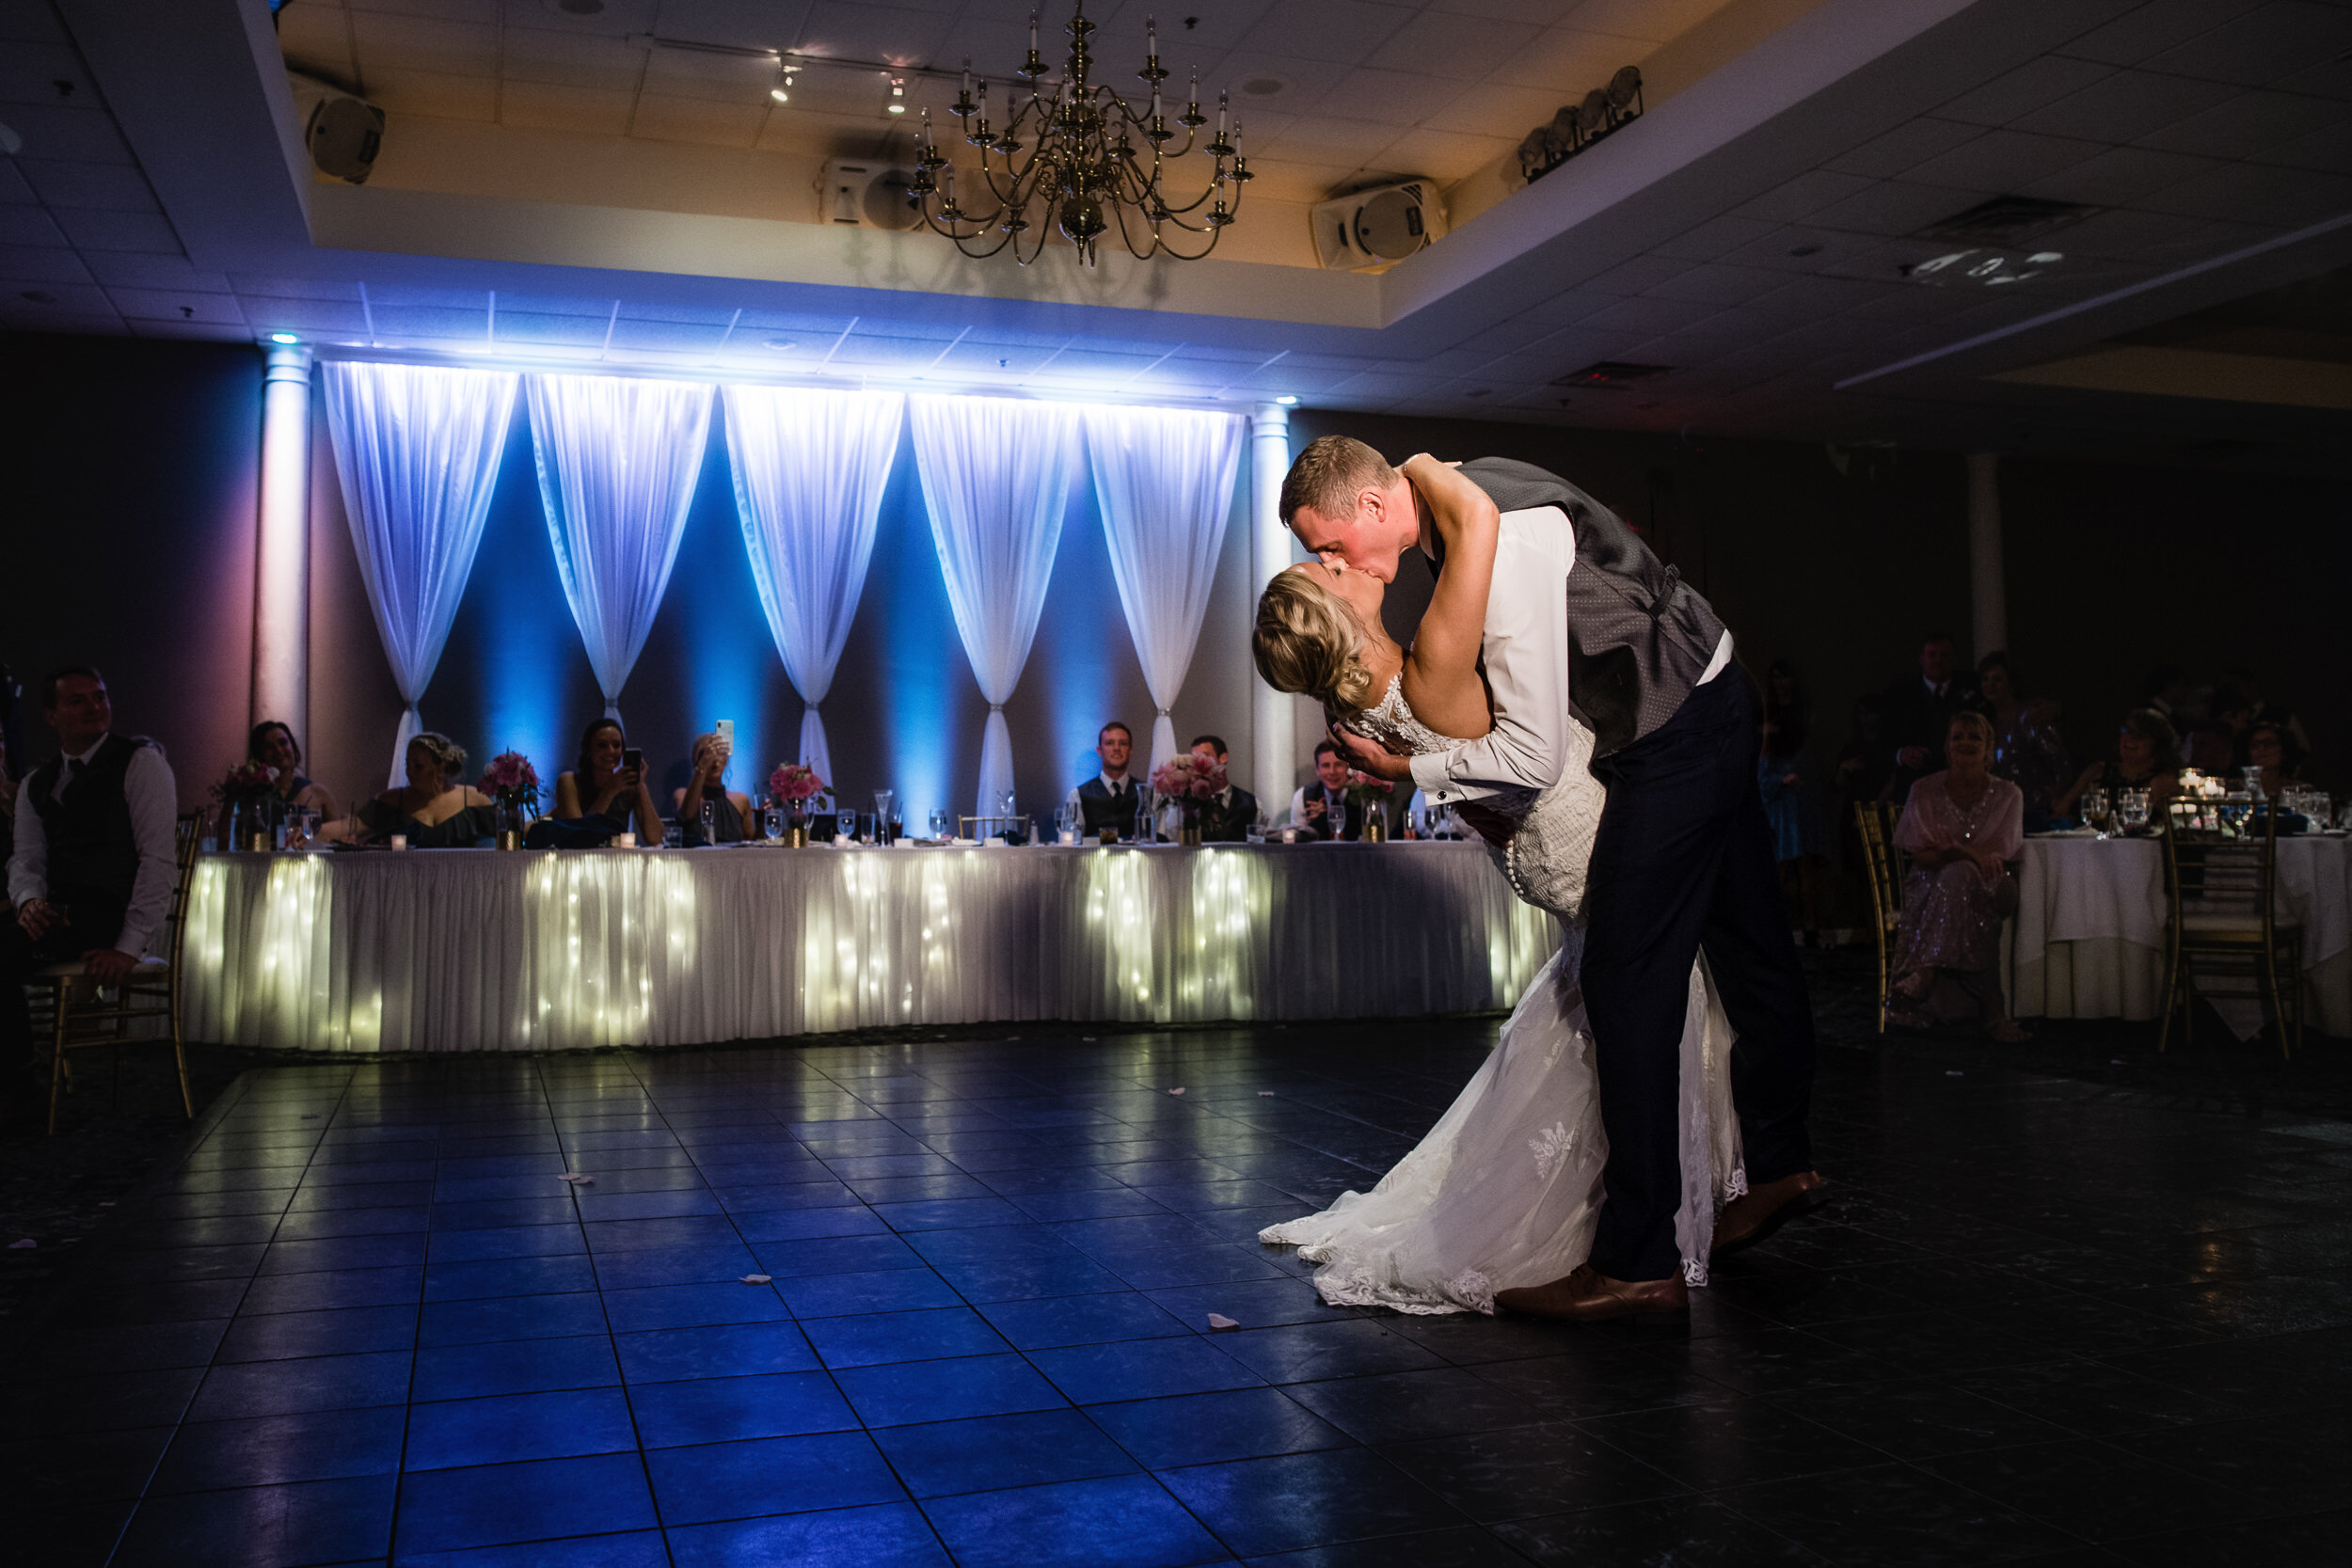 Aberdeen Manor Wedding Venue - Northwest Indiana Wedding Photographer Region Weddings